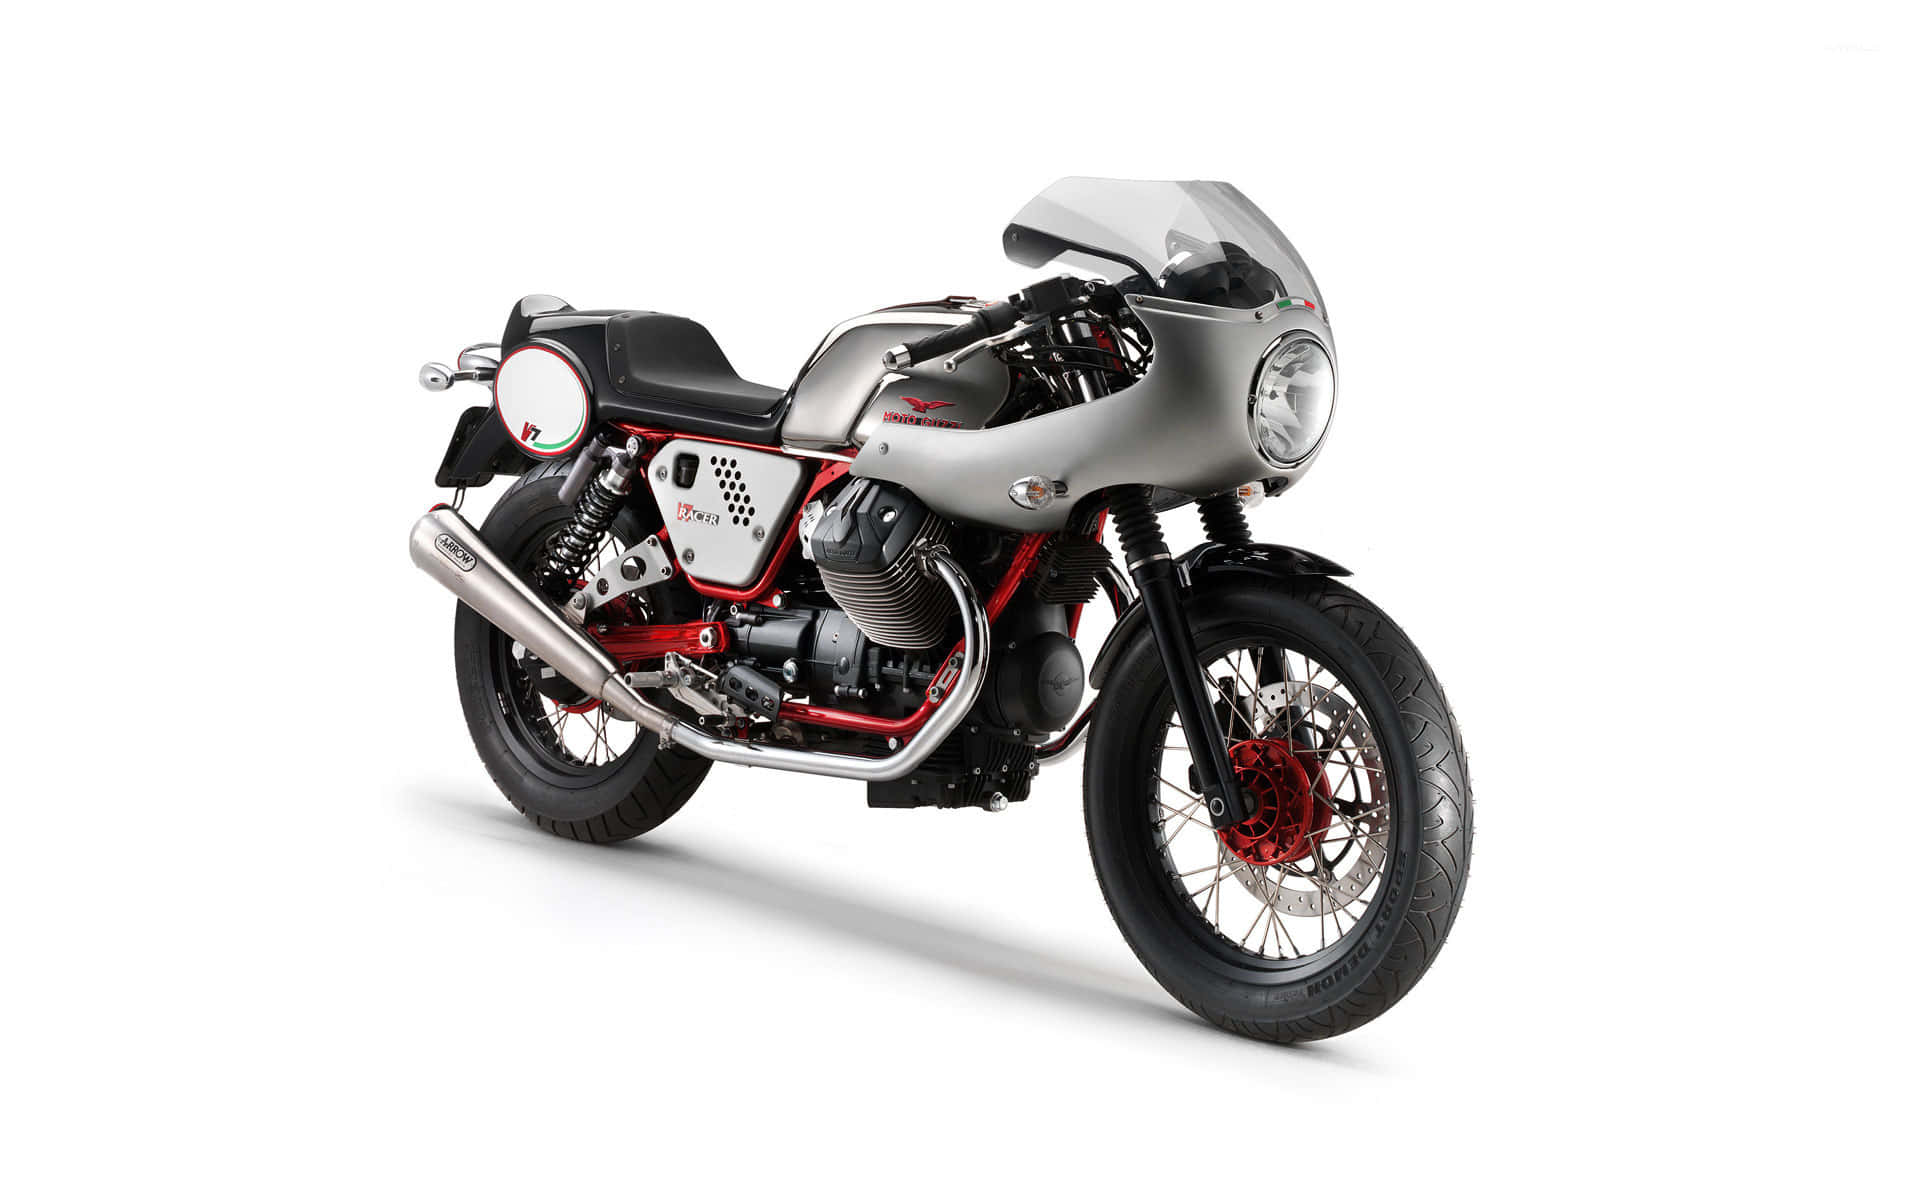 Majestic Moto Guzzi Motorcycle In Action Wallpaper